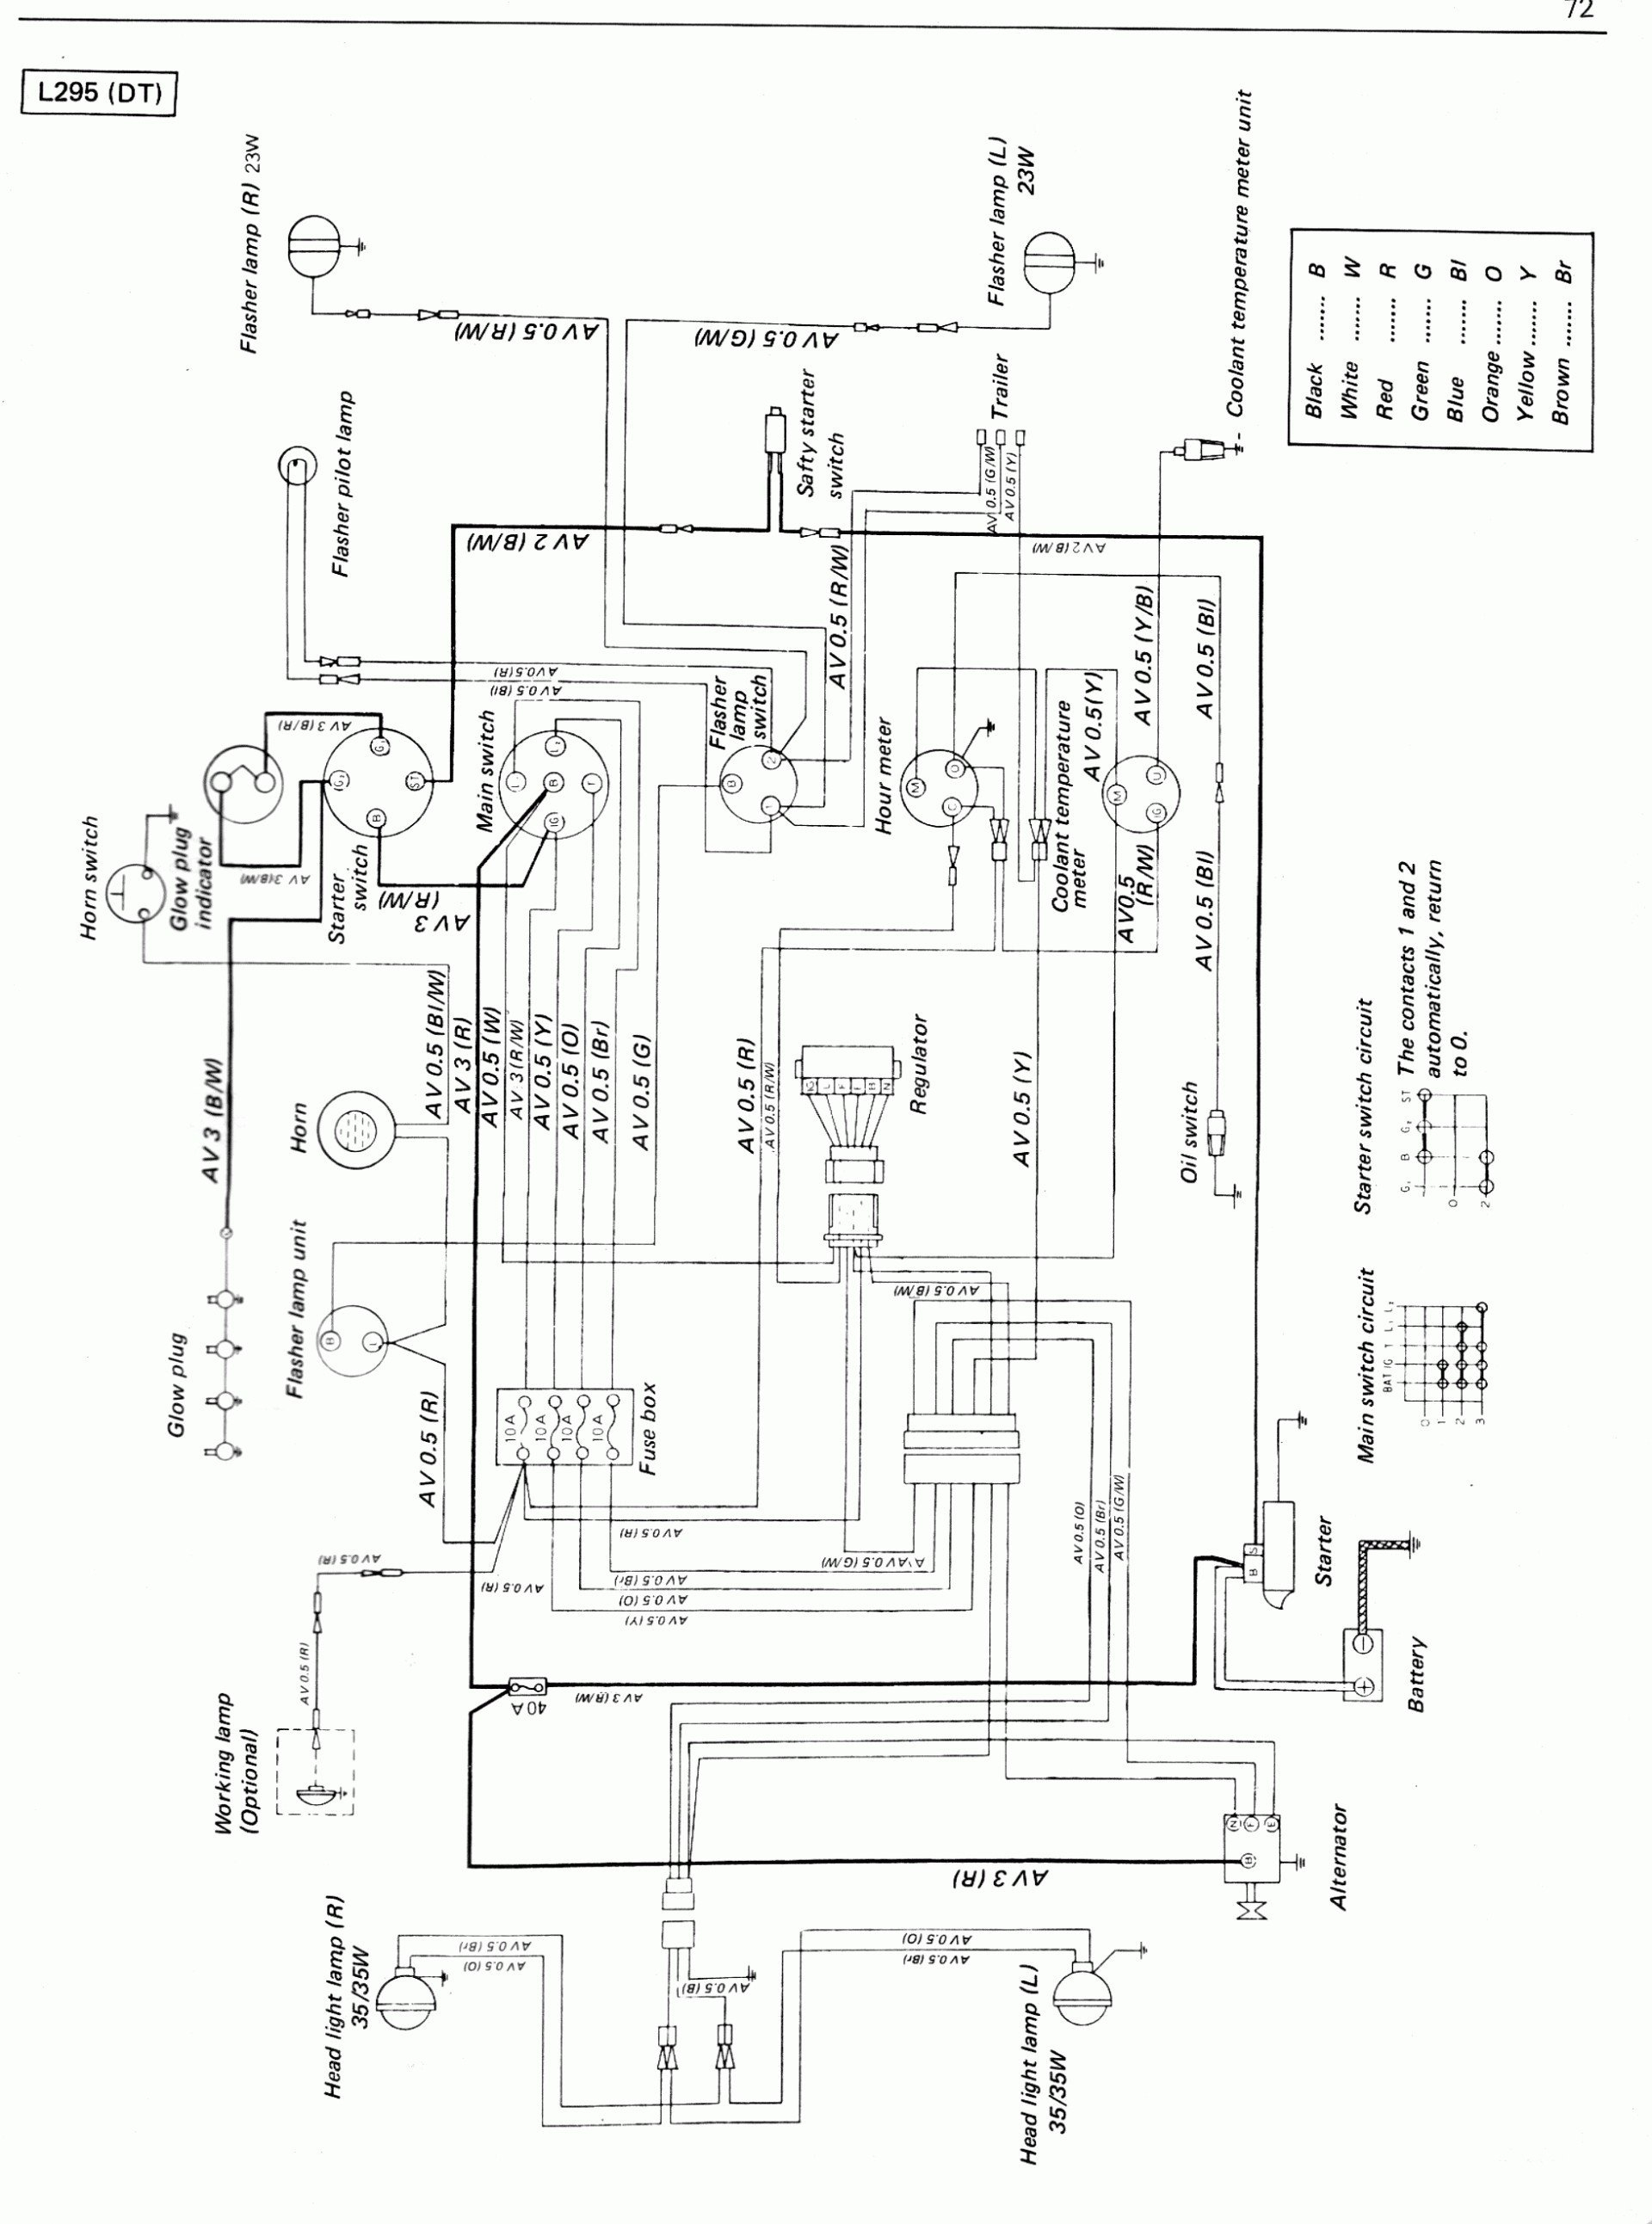 Kubota F2400 Ignition Switch Wiring Diagram | Wiring Diagram - Kubota Wiring Diagram Pdf